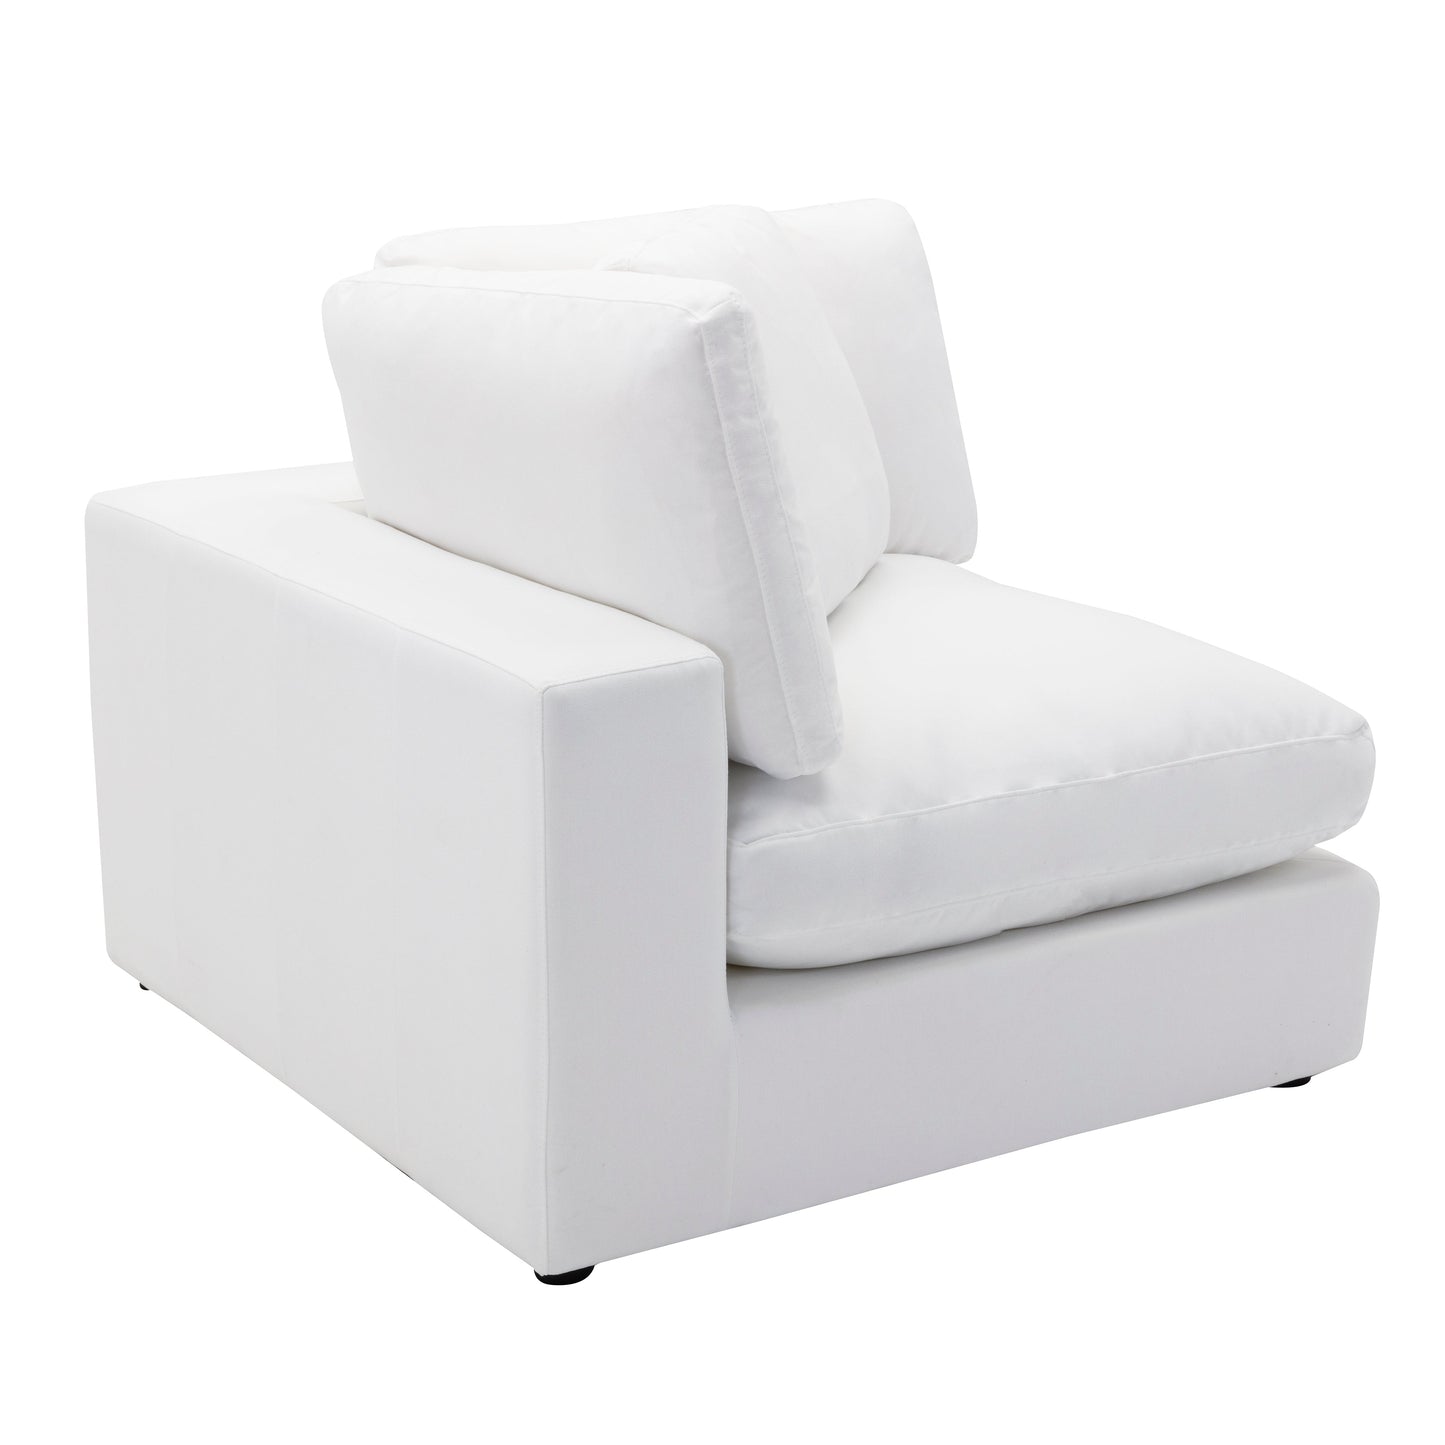 Rivas Contemporary Feather Fill 5-Piece Modular Sectional Sofa with Ottoman, White